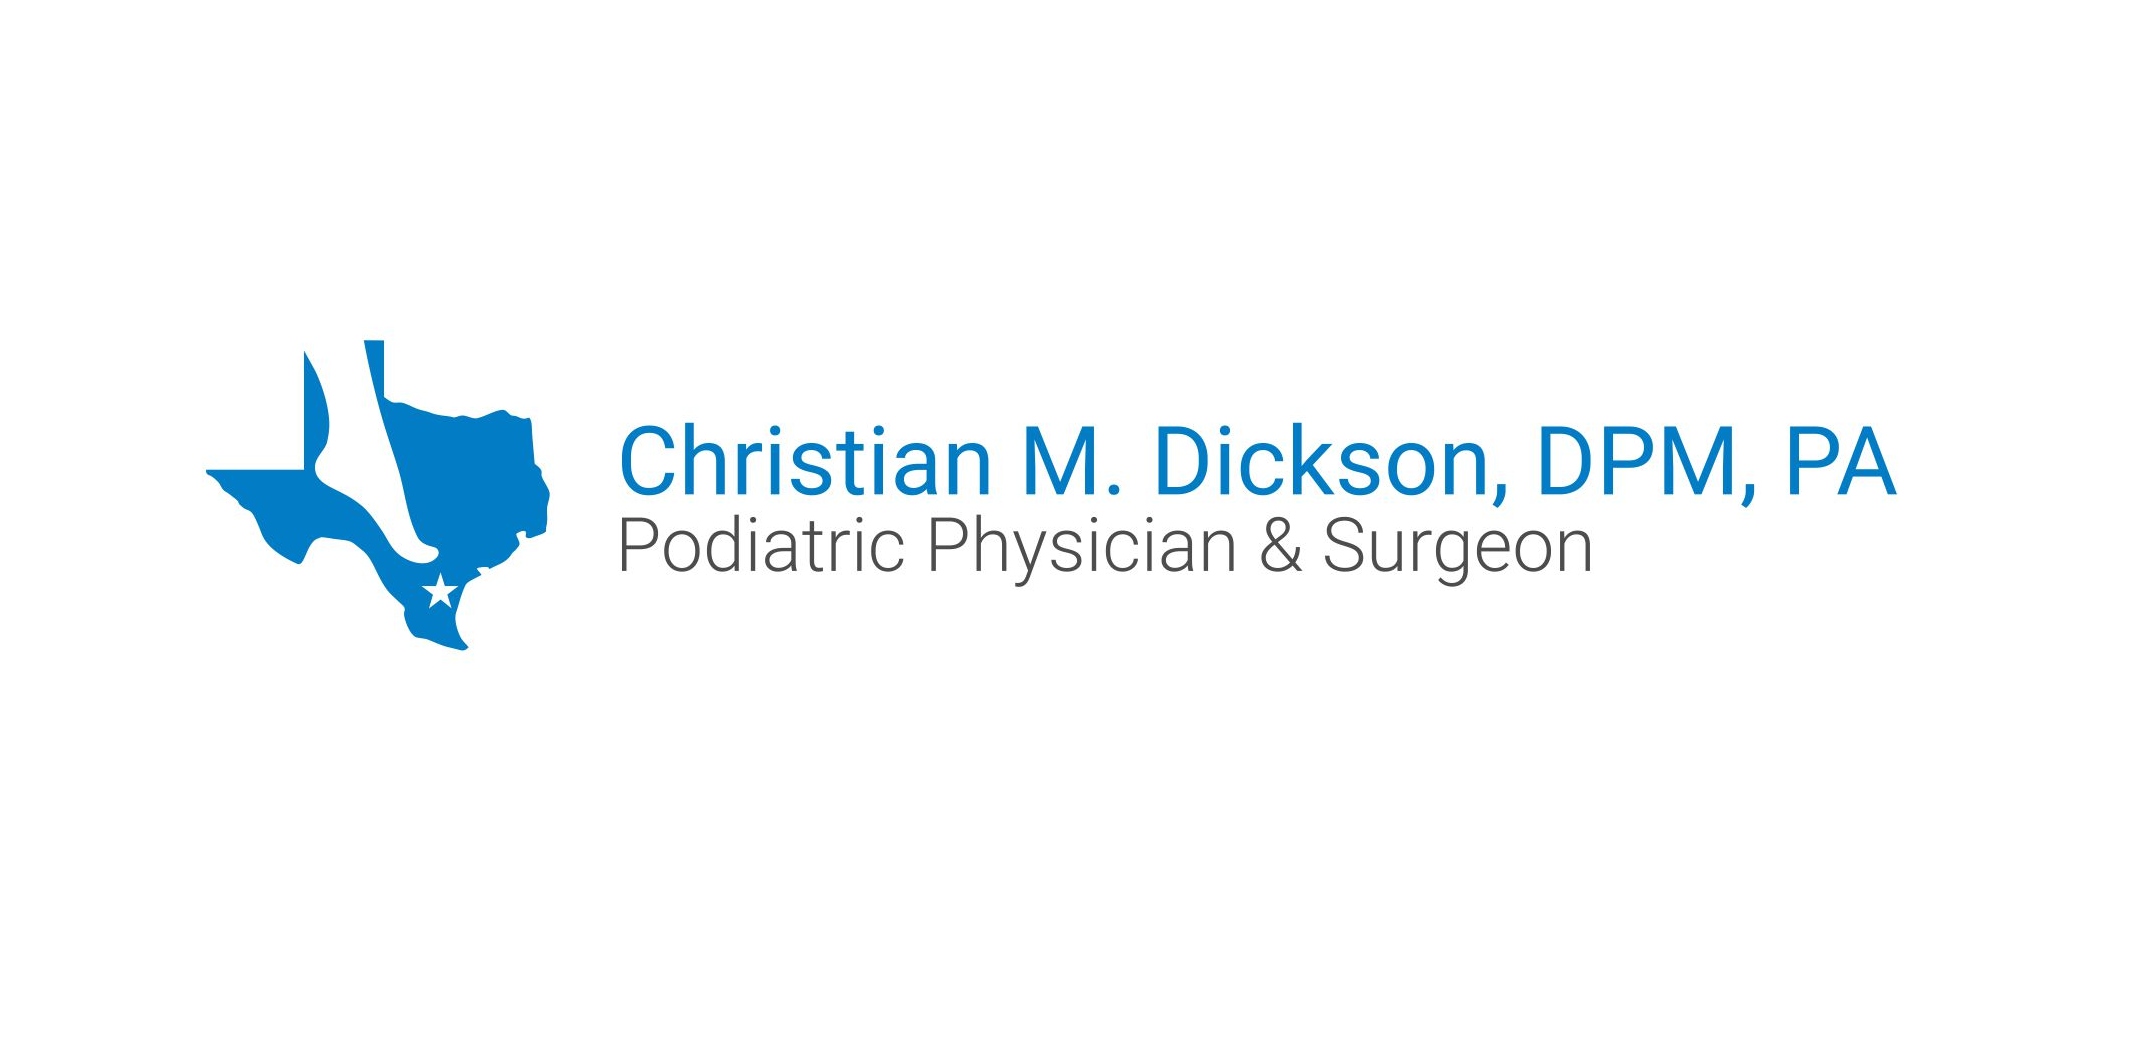 Christian M. Dickson, DPM, PA